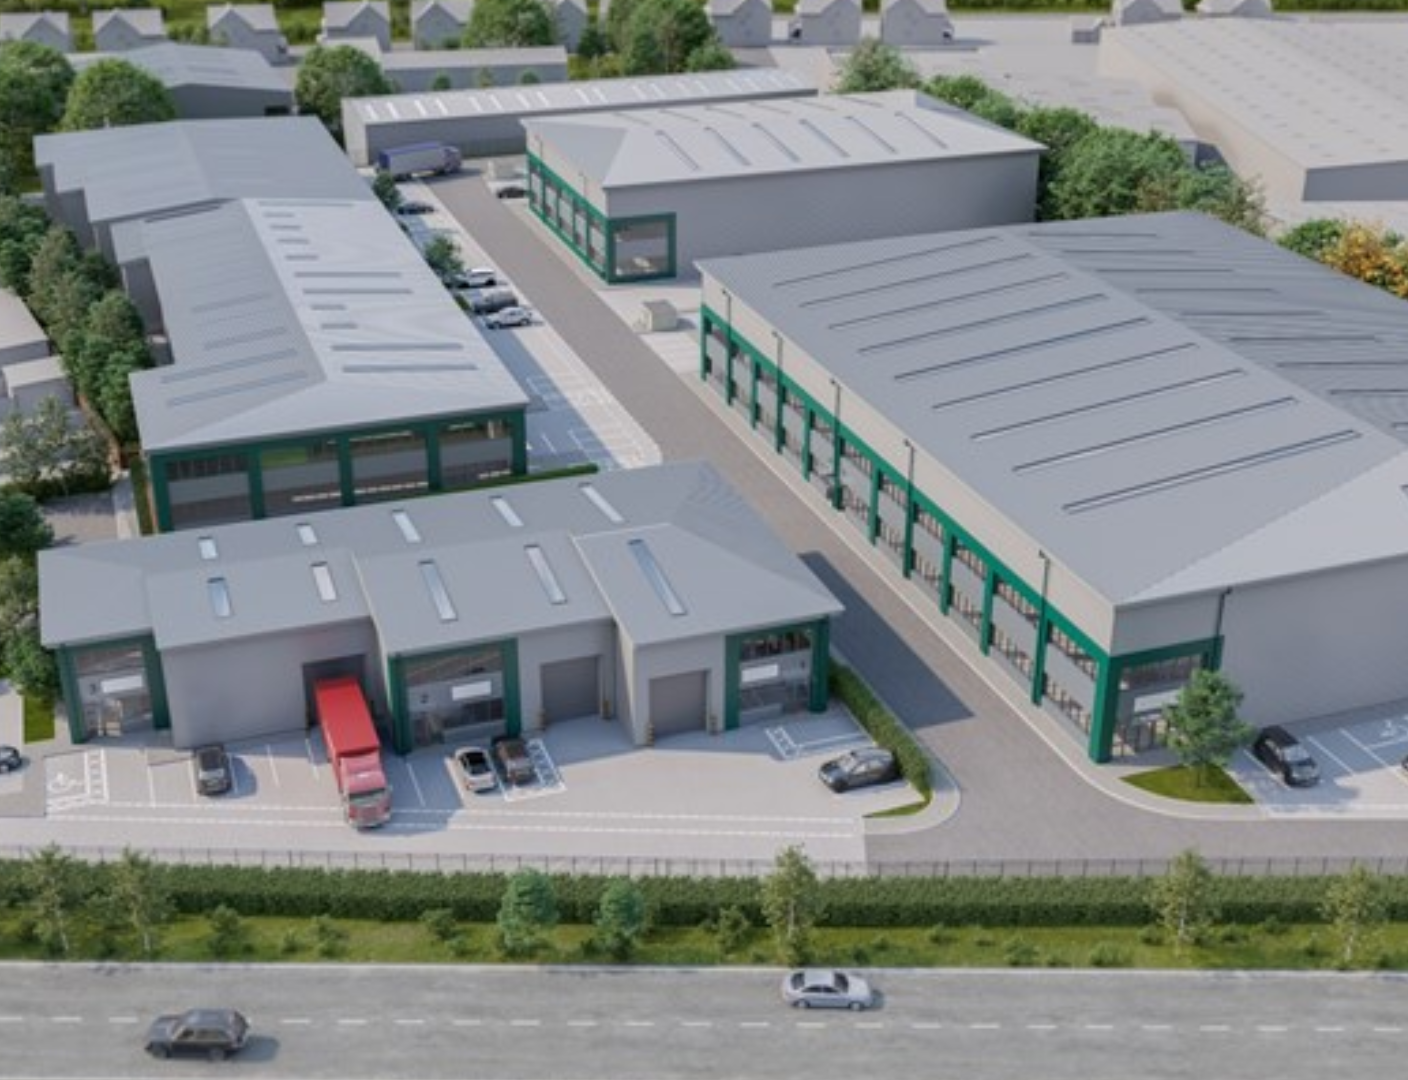 Industrial development in Luton gains planning permission - Planning, BIM & Construction Today